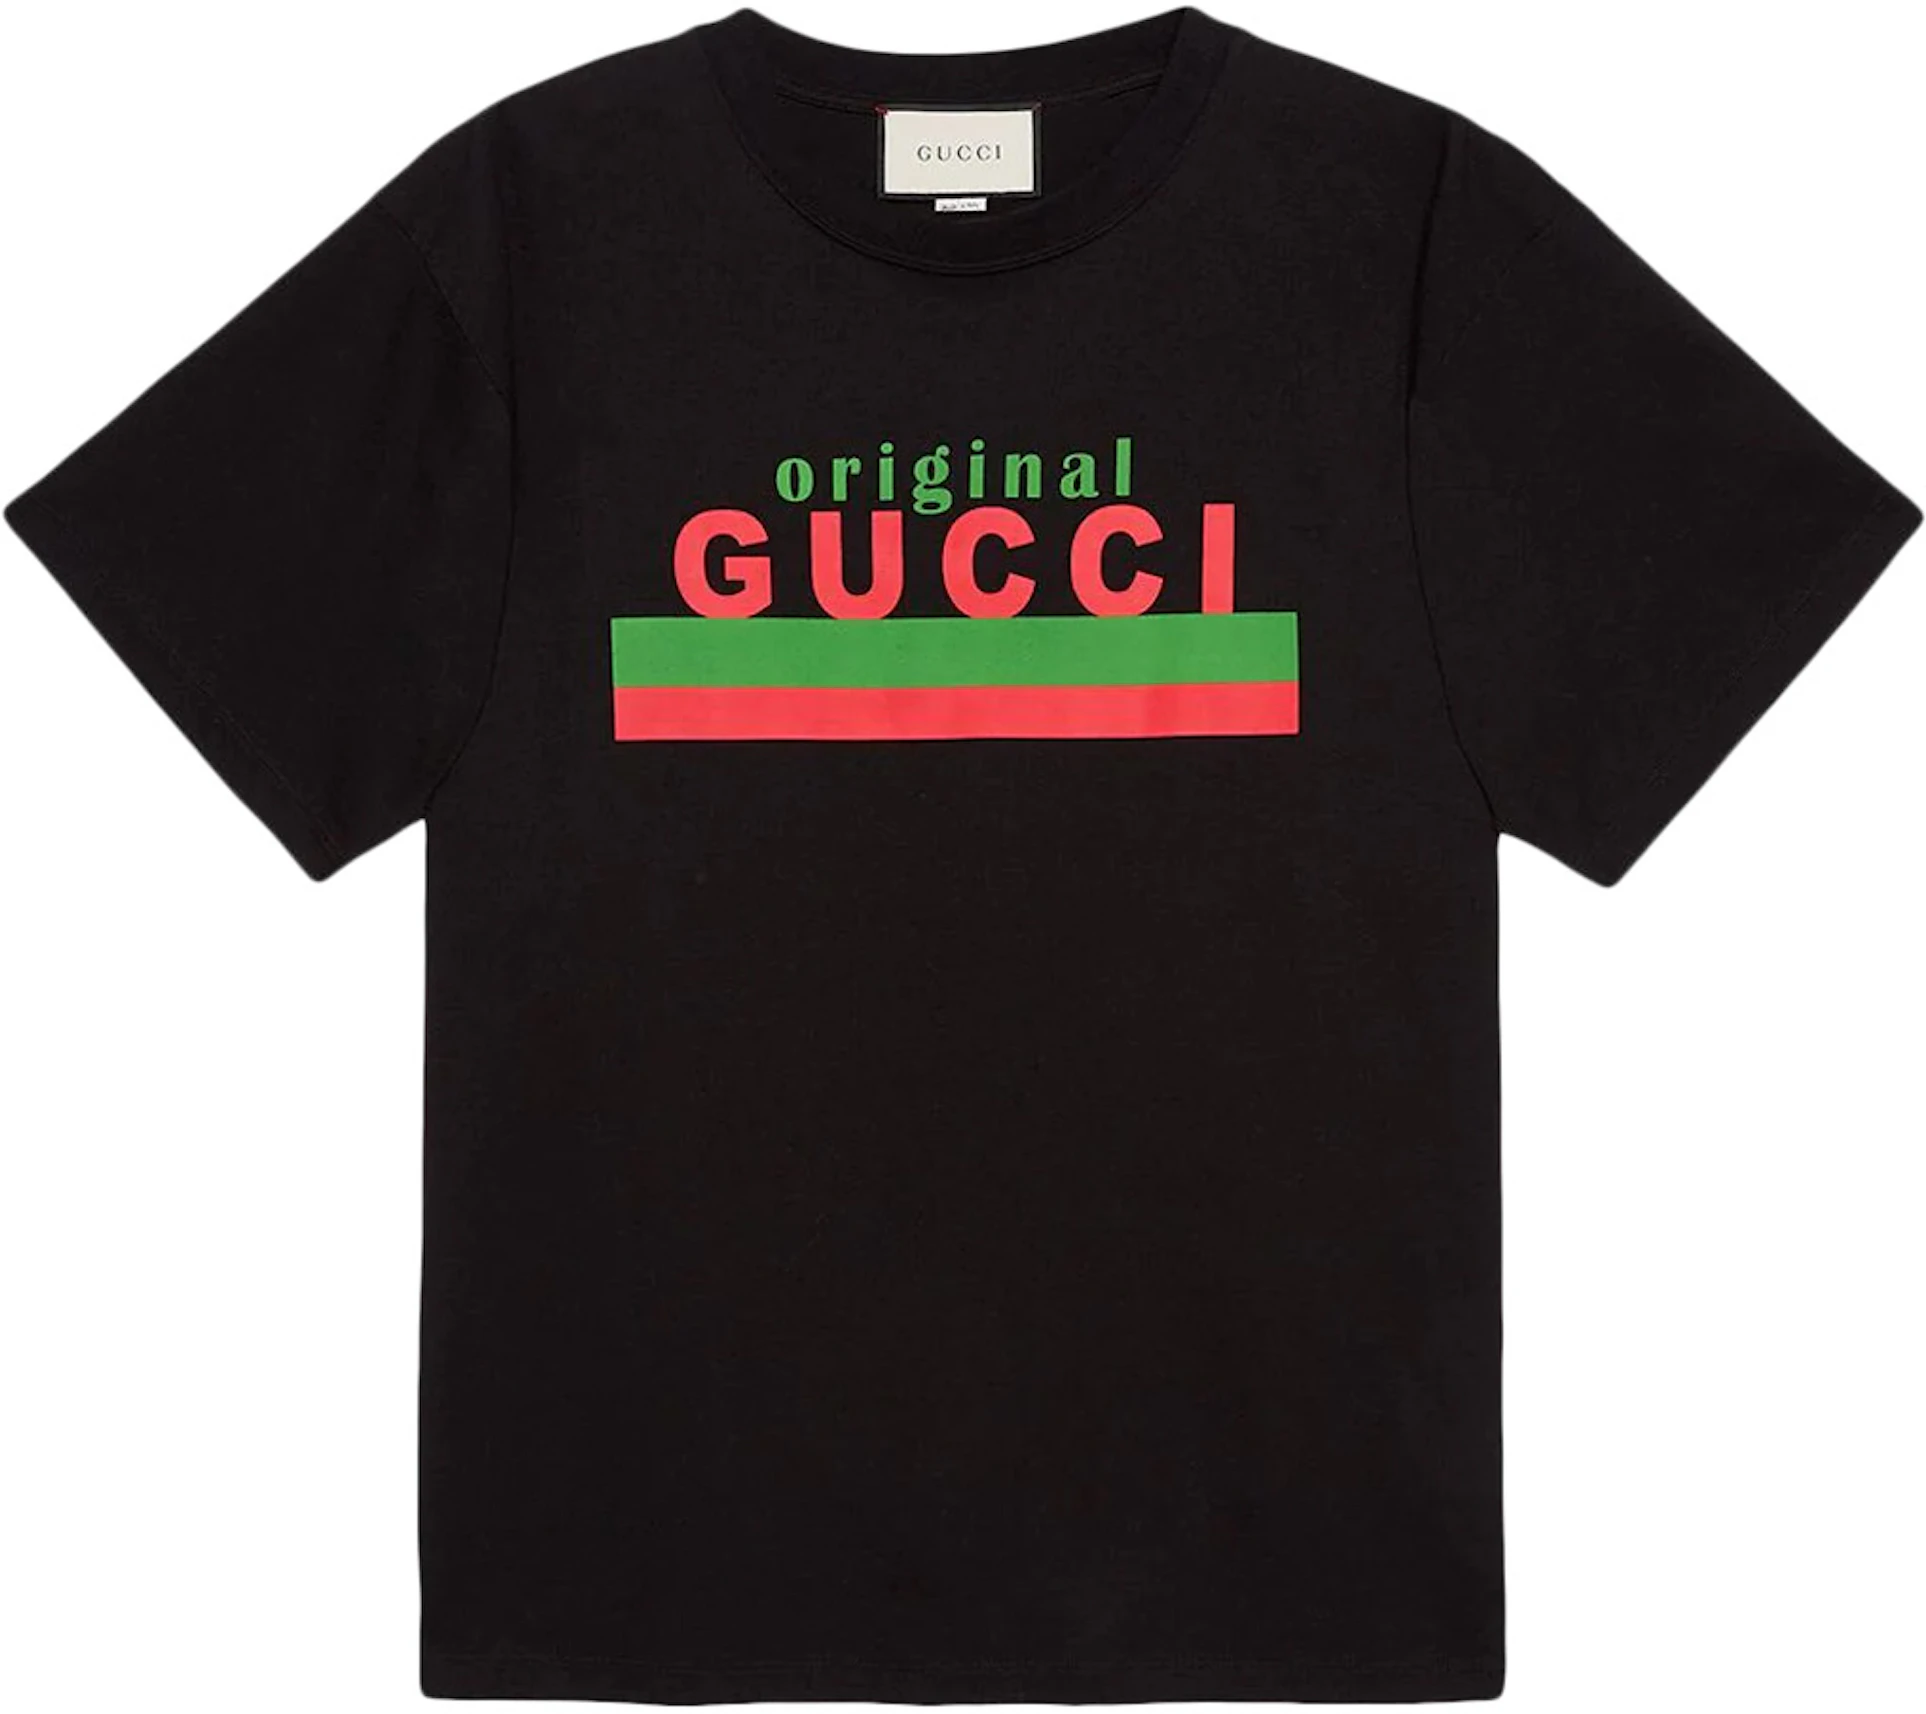 Gucci Original Gucci Printed T-shirt Black/Red/Green - US